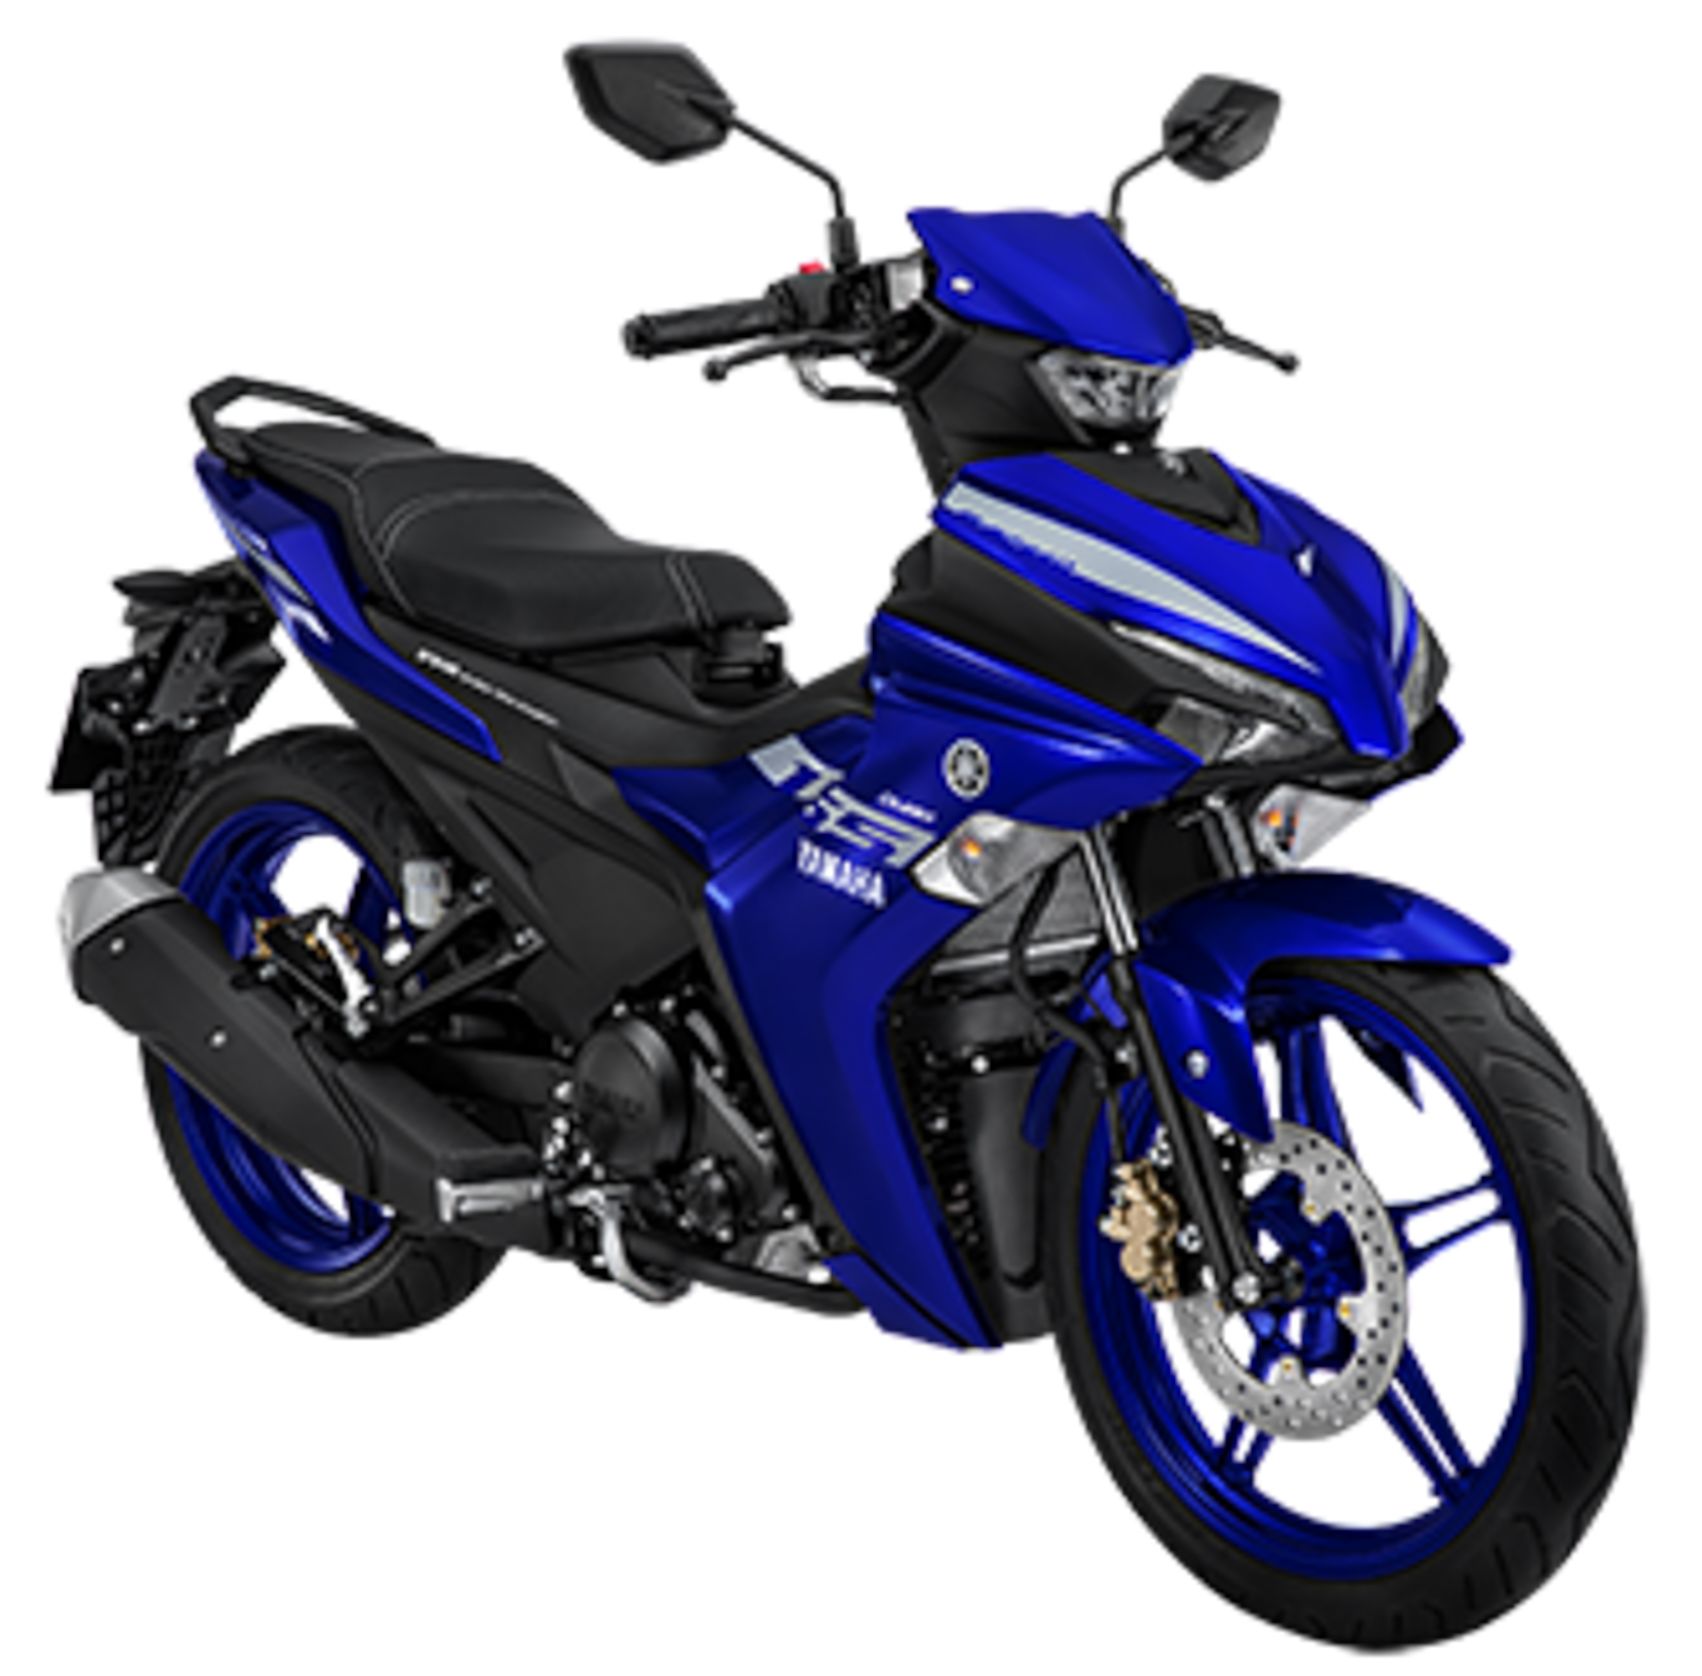 Yamaha Exciter serba baru dilancar di Vietnam - enjin 155 cc VVA 17.7 ...